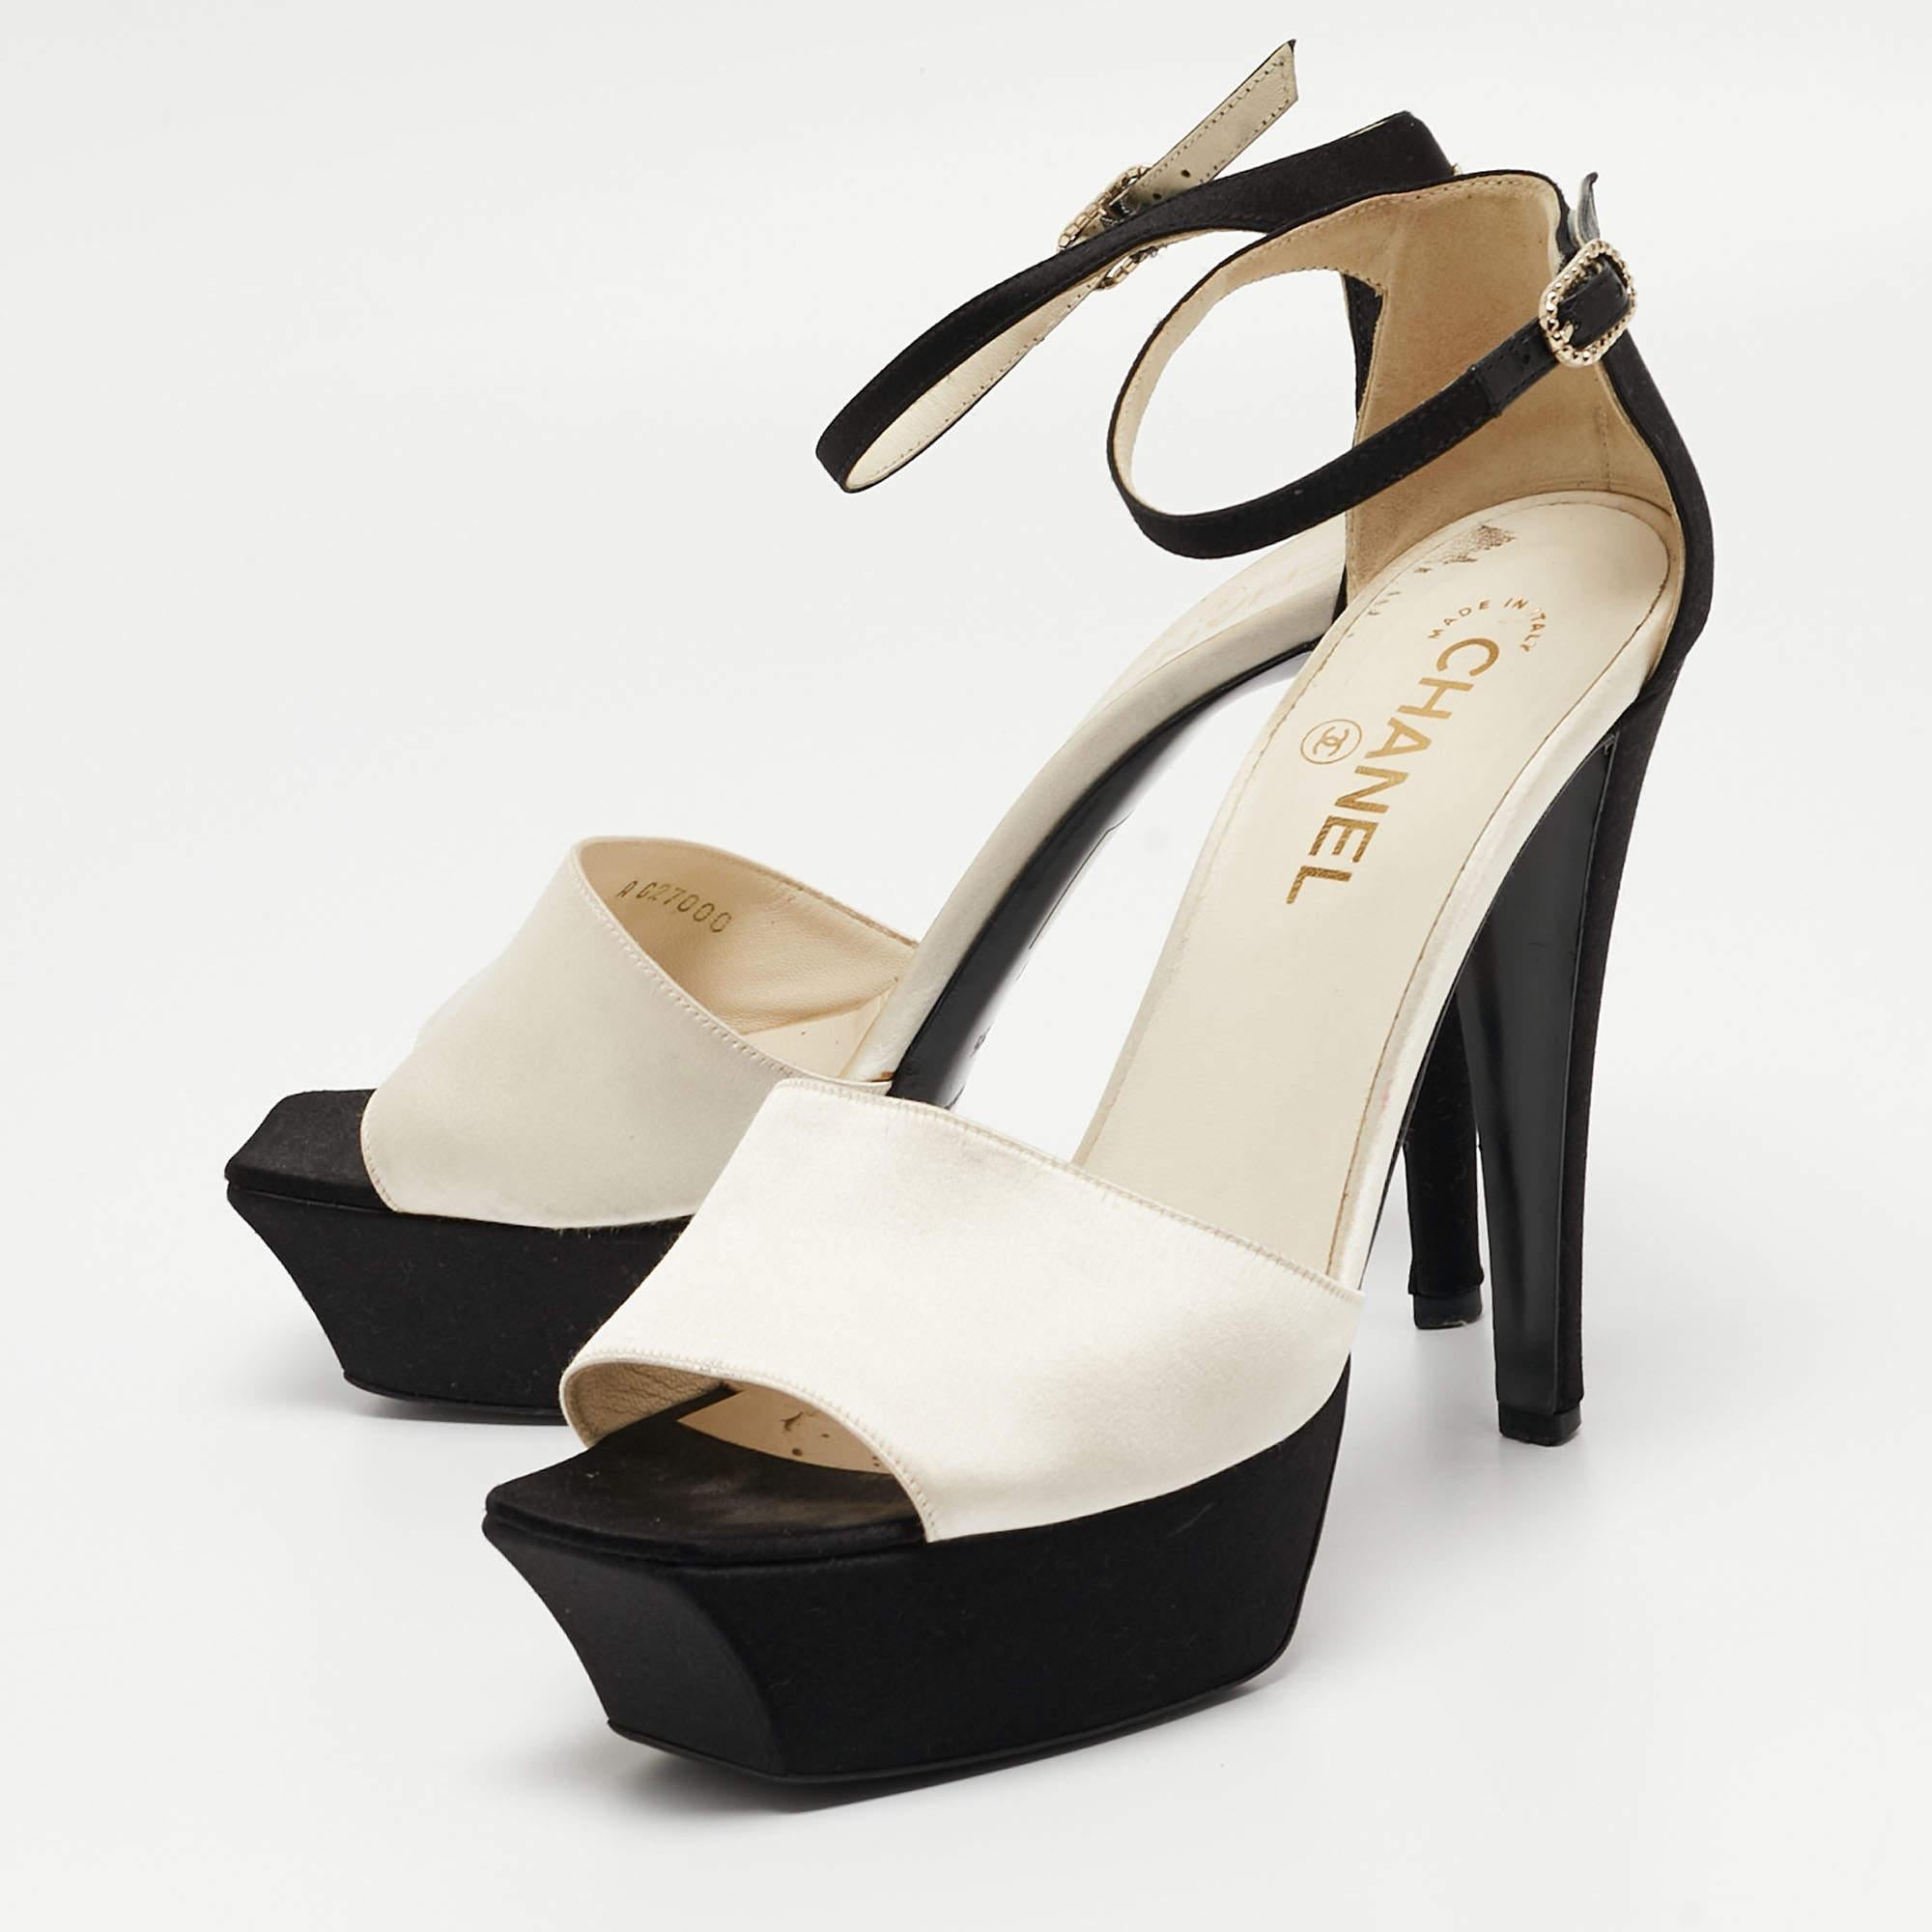  Chanel White/Black Satin Peep Toe Sandals Size 39.5 For Sale 2